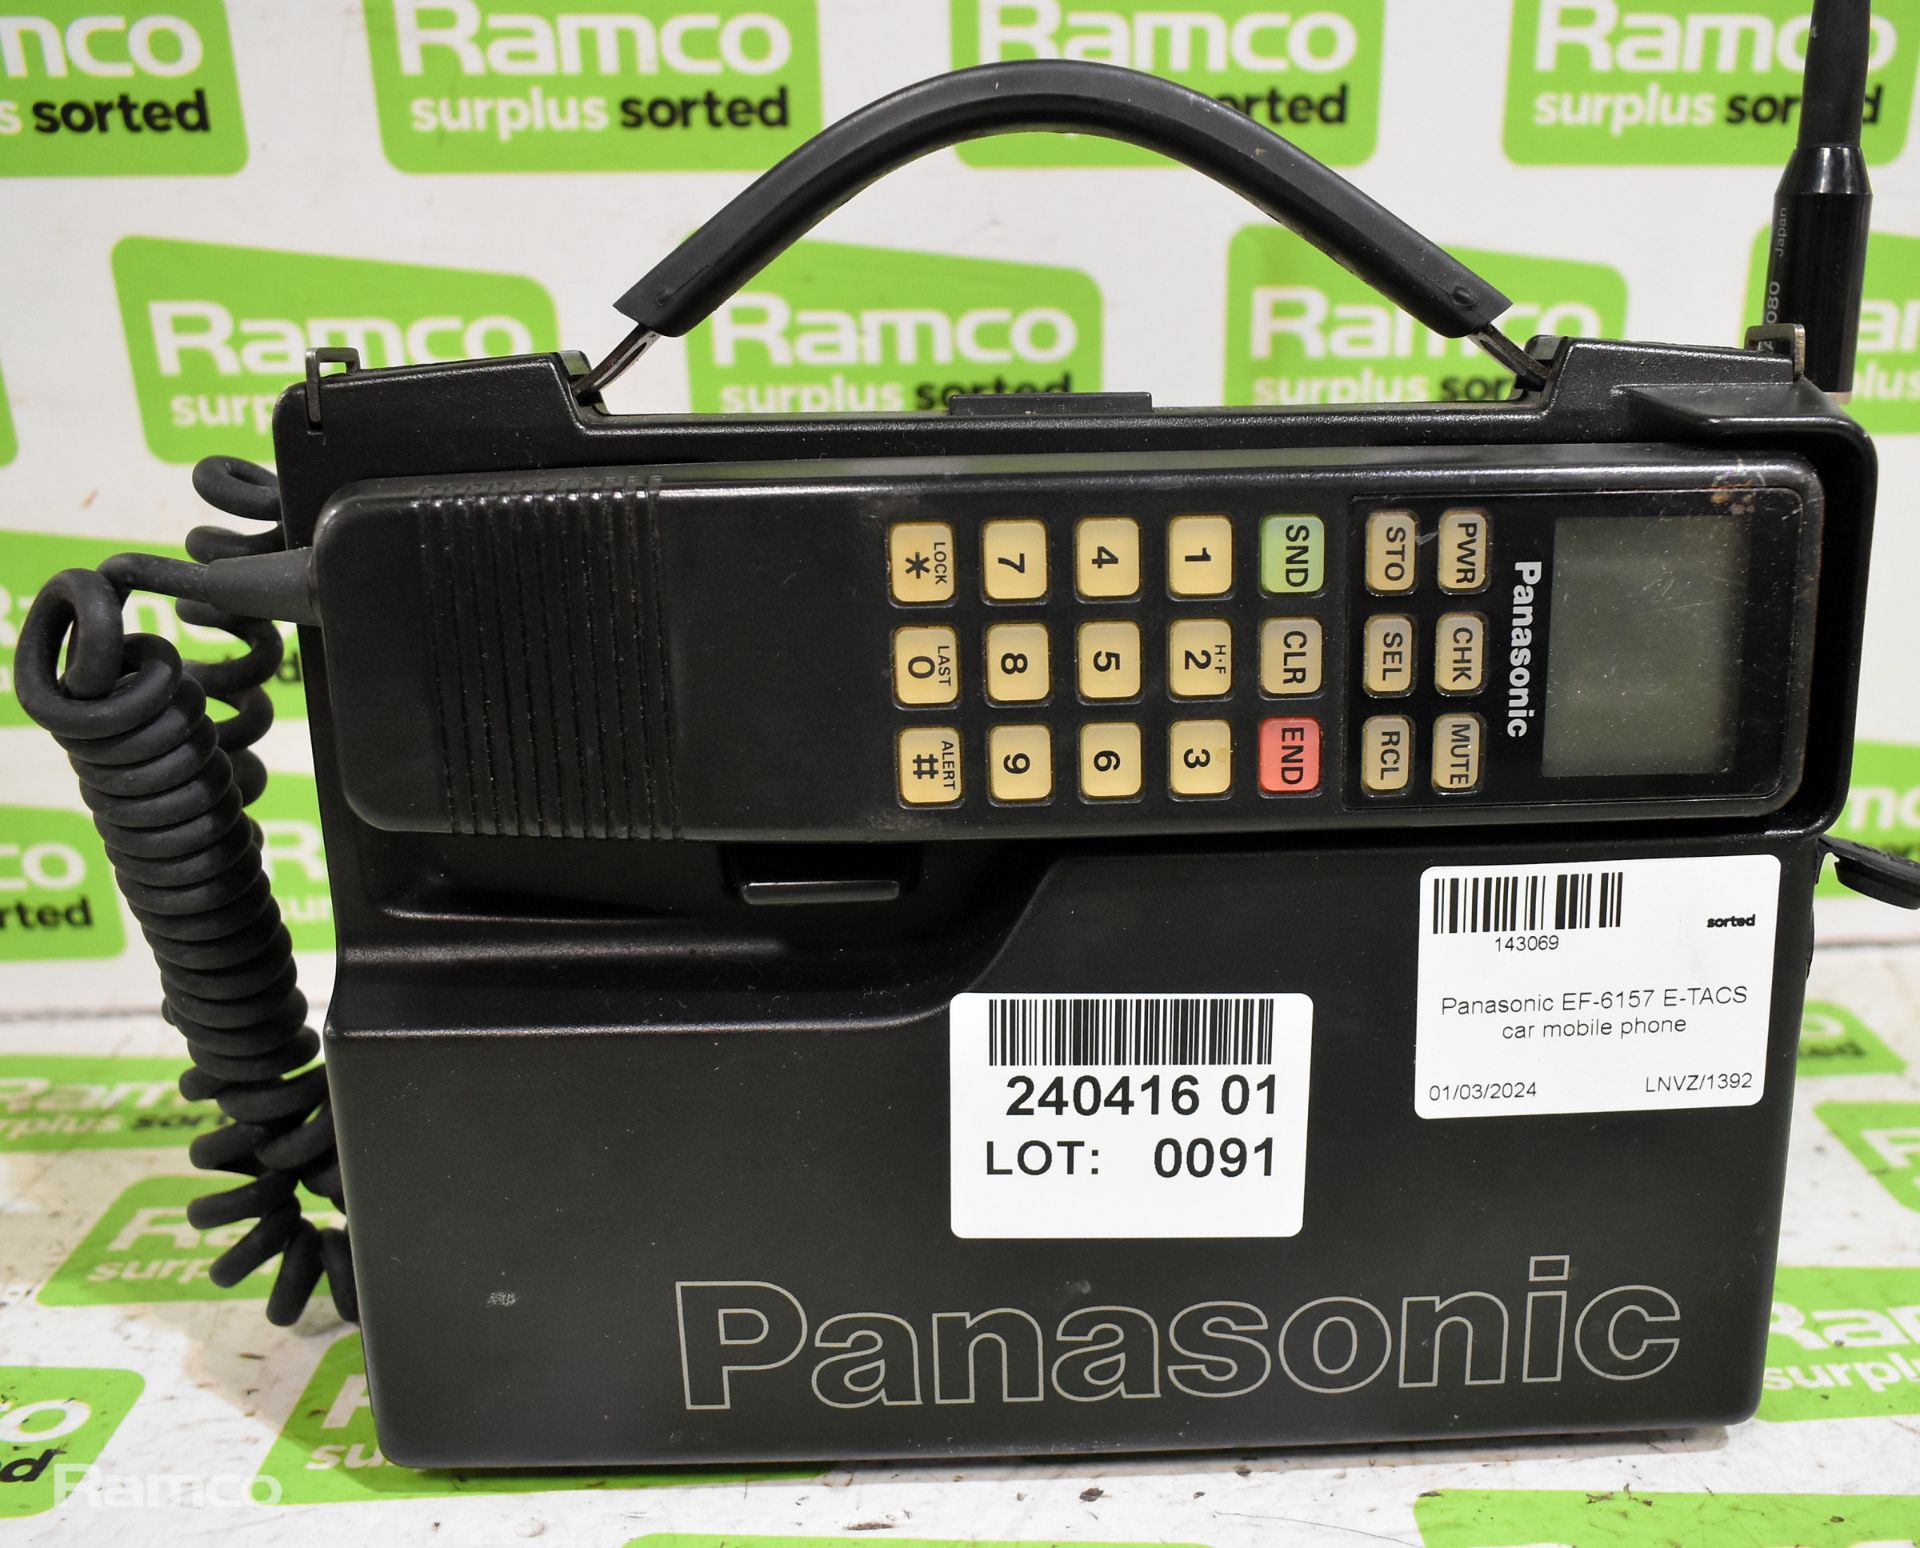 Panasonic EF-6157 E-TACS car mobile phone - Image 2 of 7